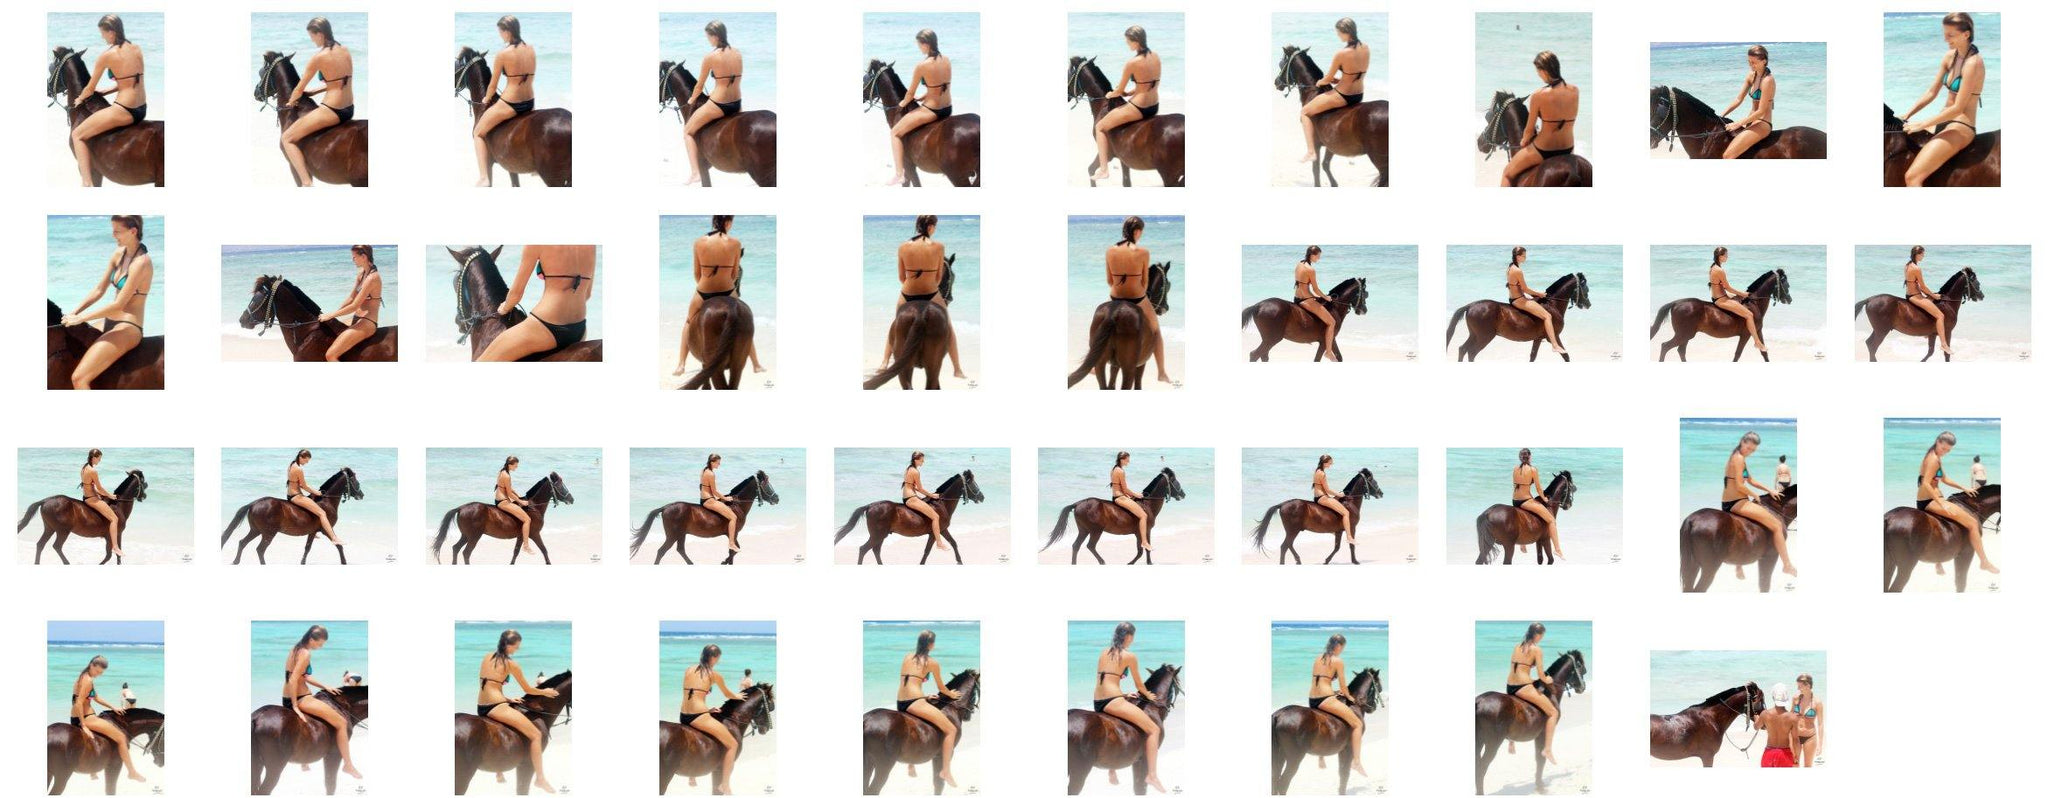 Madison in Bikini Riding Bareback on Brown Pony, Part 2 - Riding.Vision